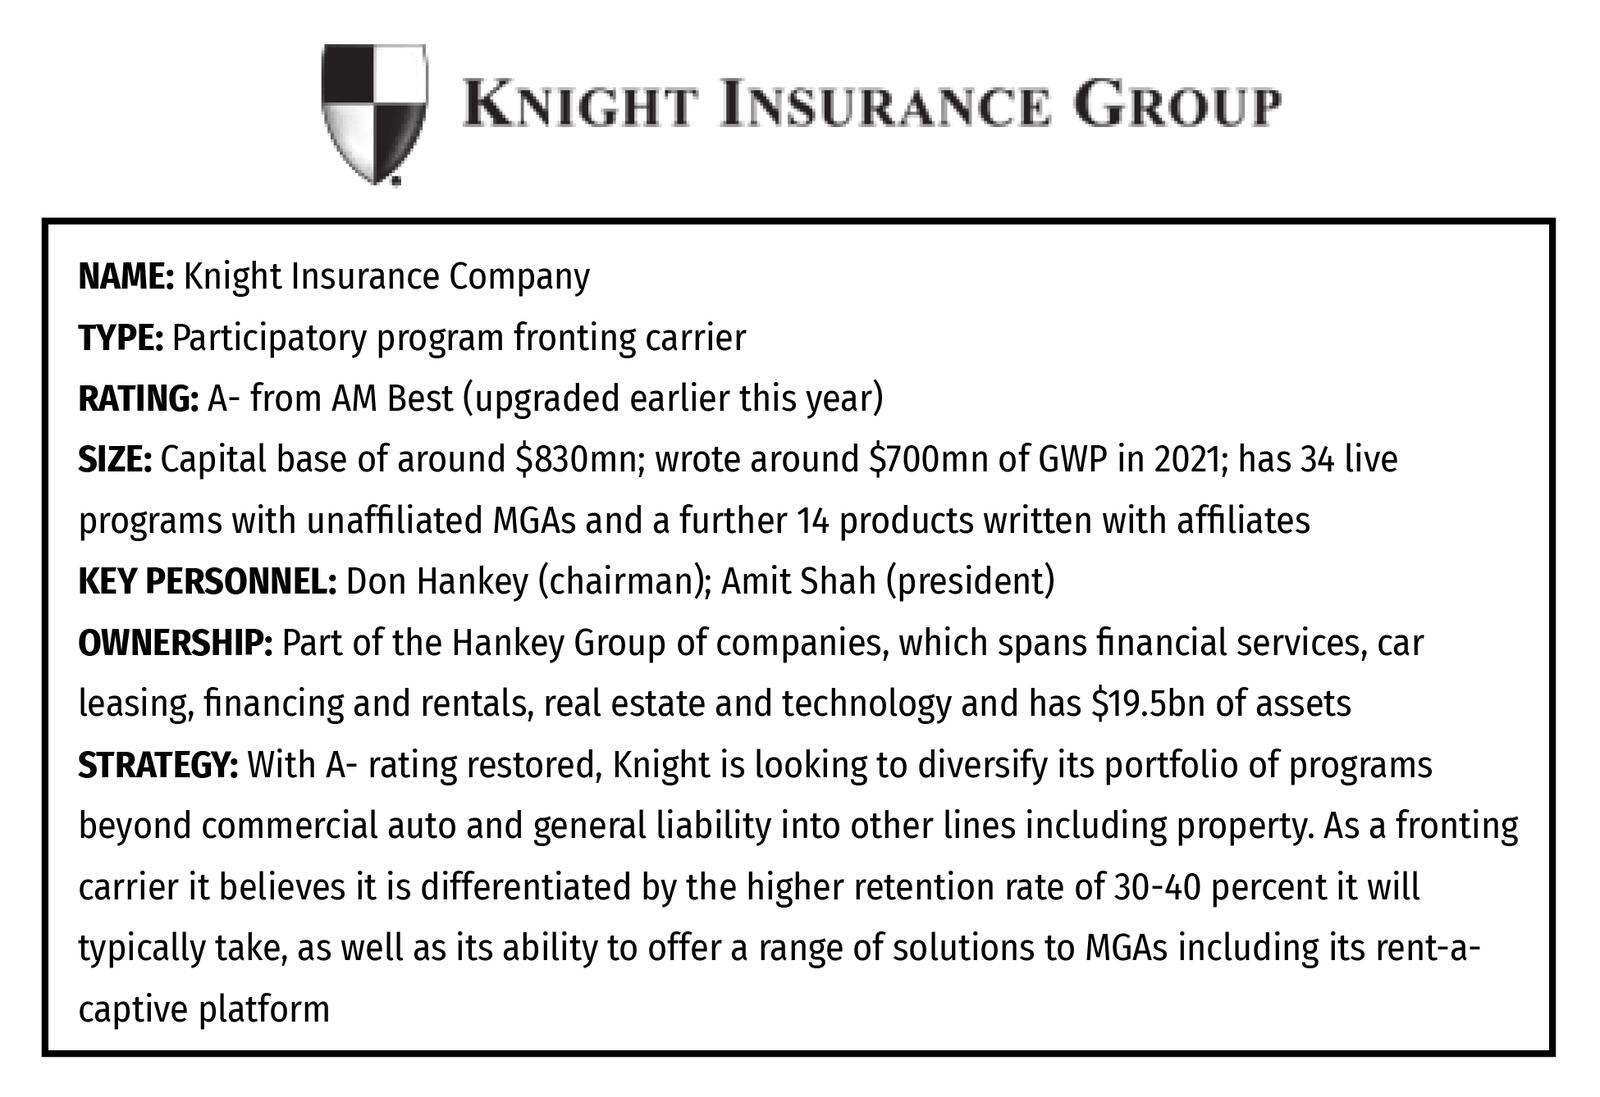 Knight Insurance Group factfile